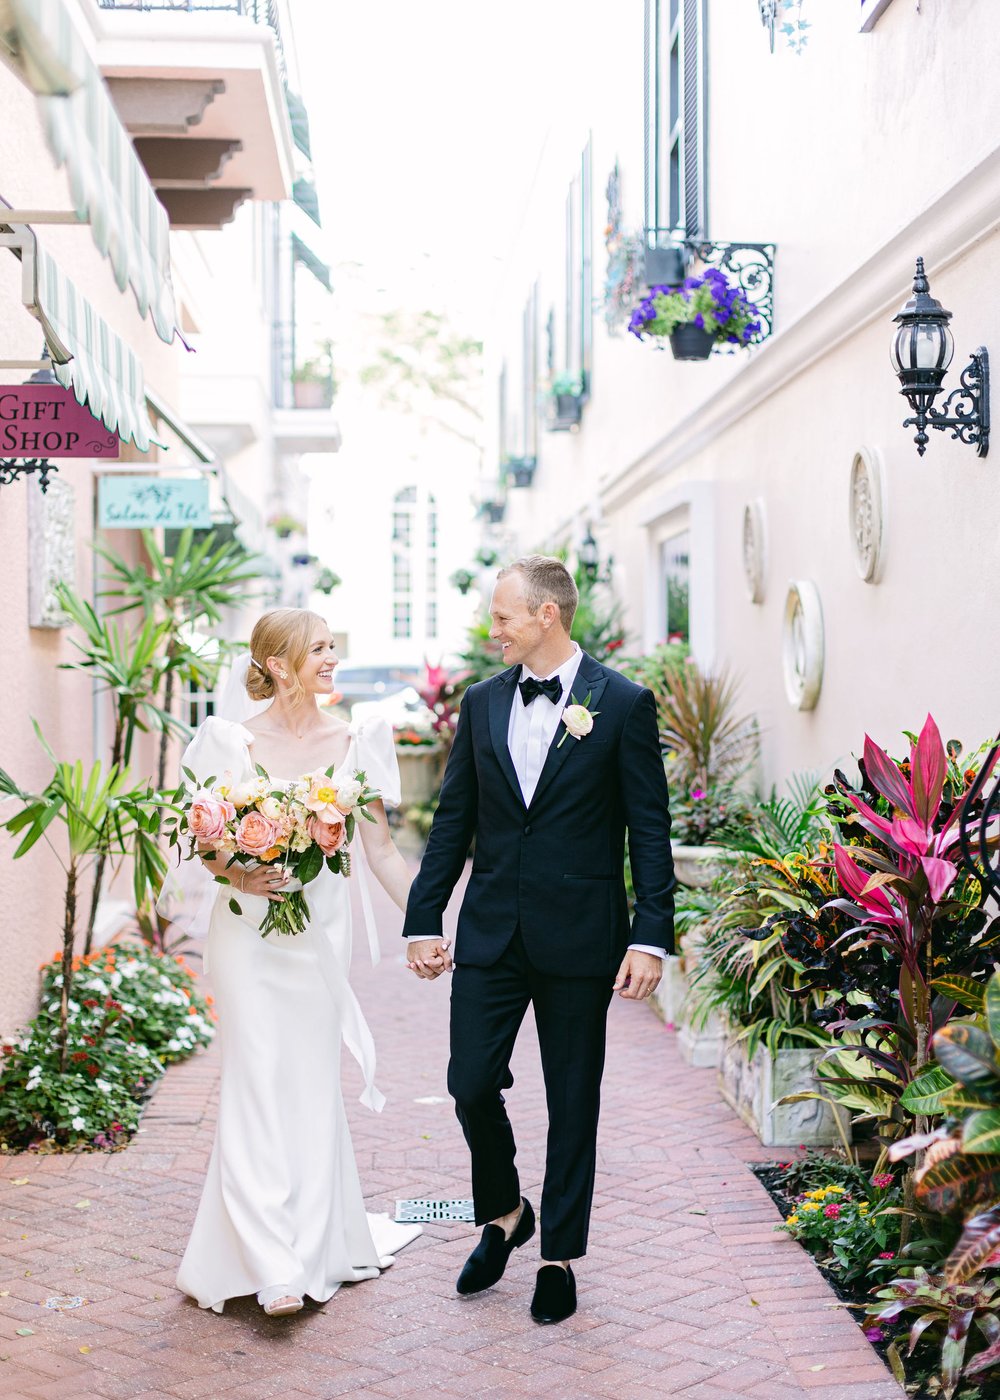 Naples, FL wedding